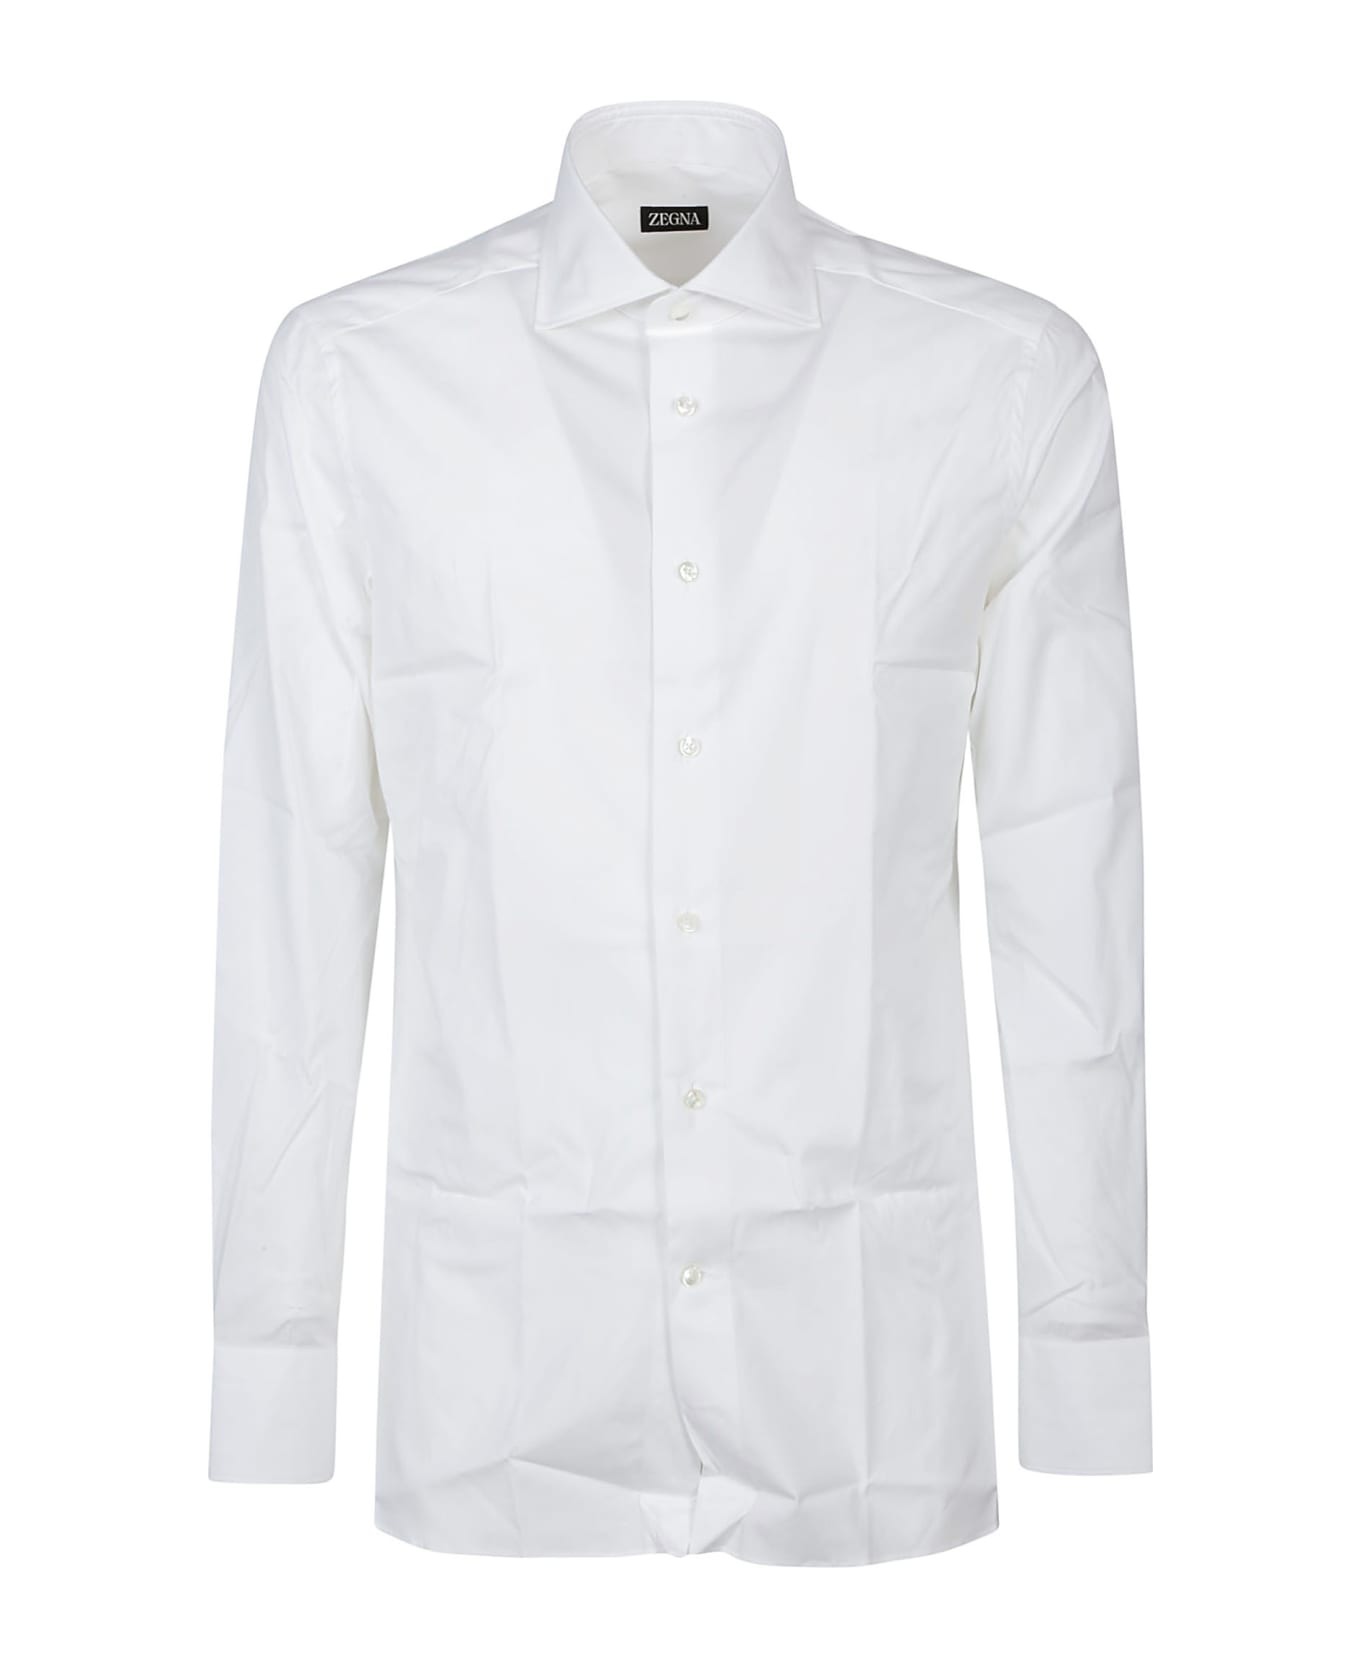 Zegna Long Sleeve Shirt - Bianco